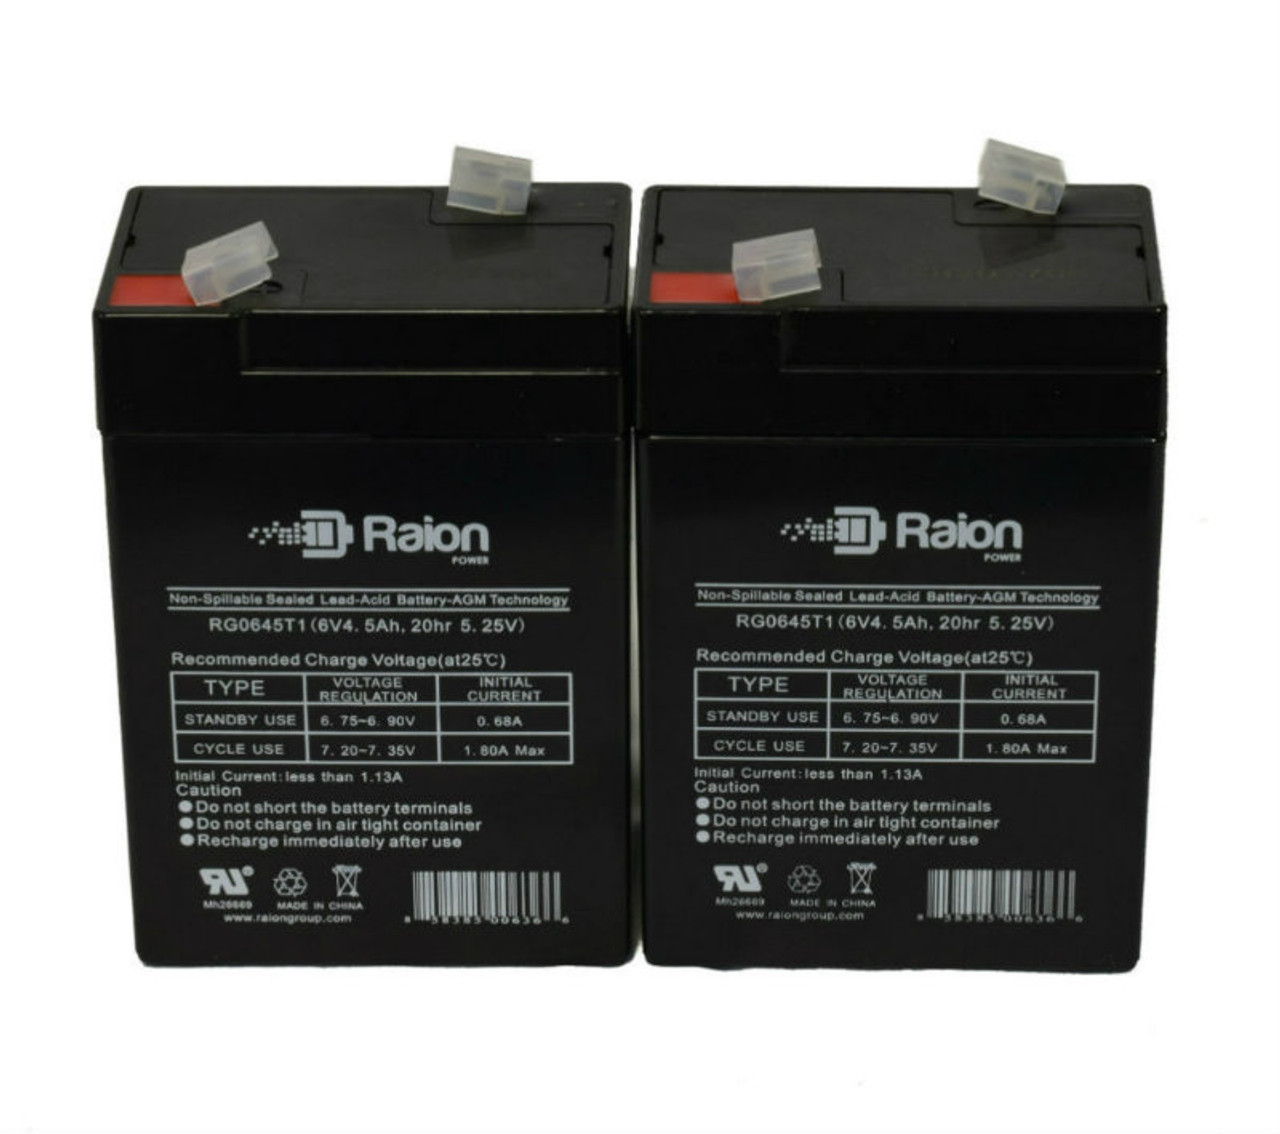 Raion Power 6V 4.5Ah Replacement Emergency Light Battery for Douglas Guardian DG6-4 - 2 Pack